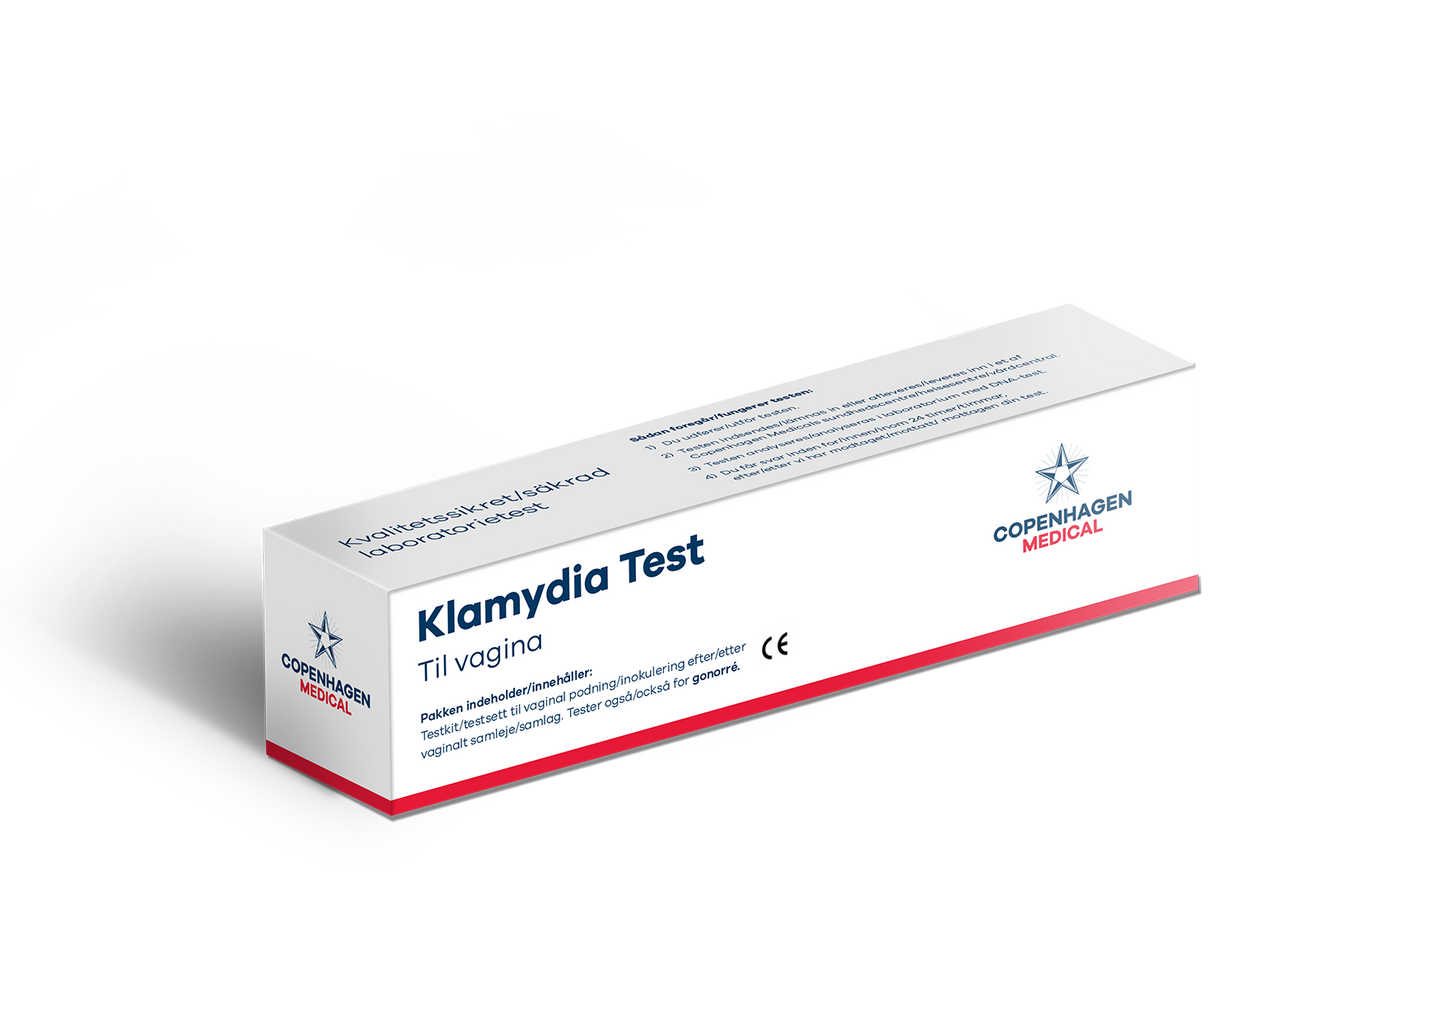 Chlamydia test - vaginal